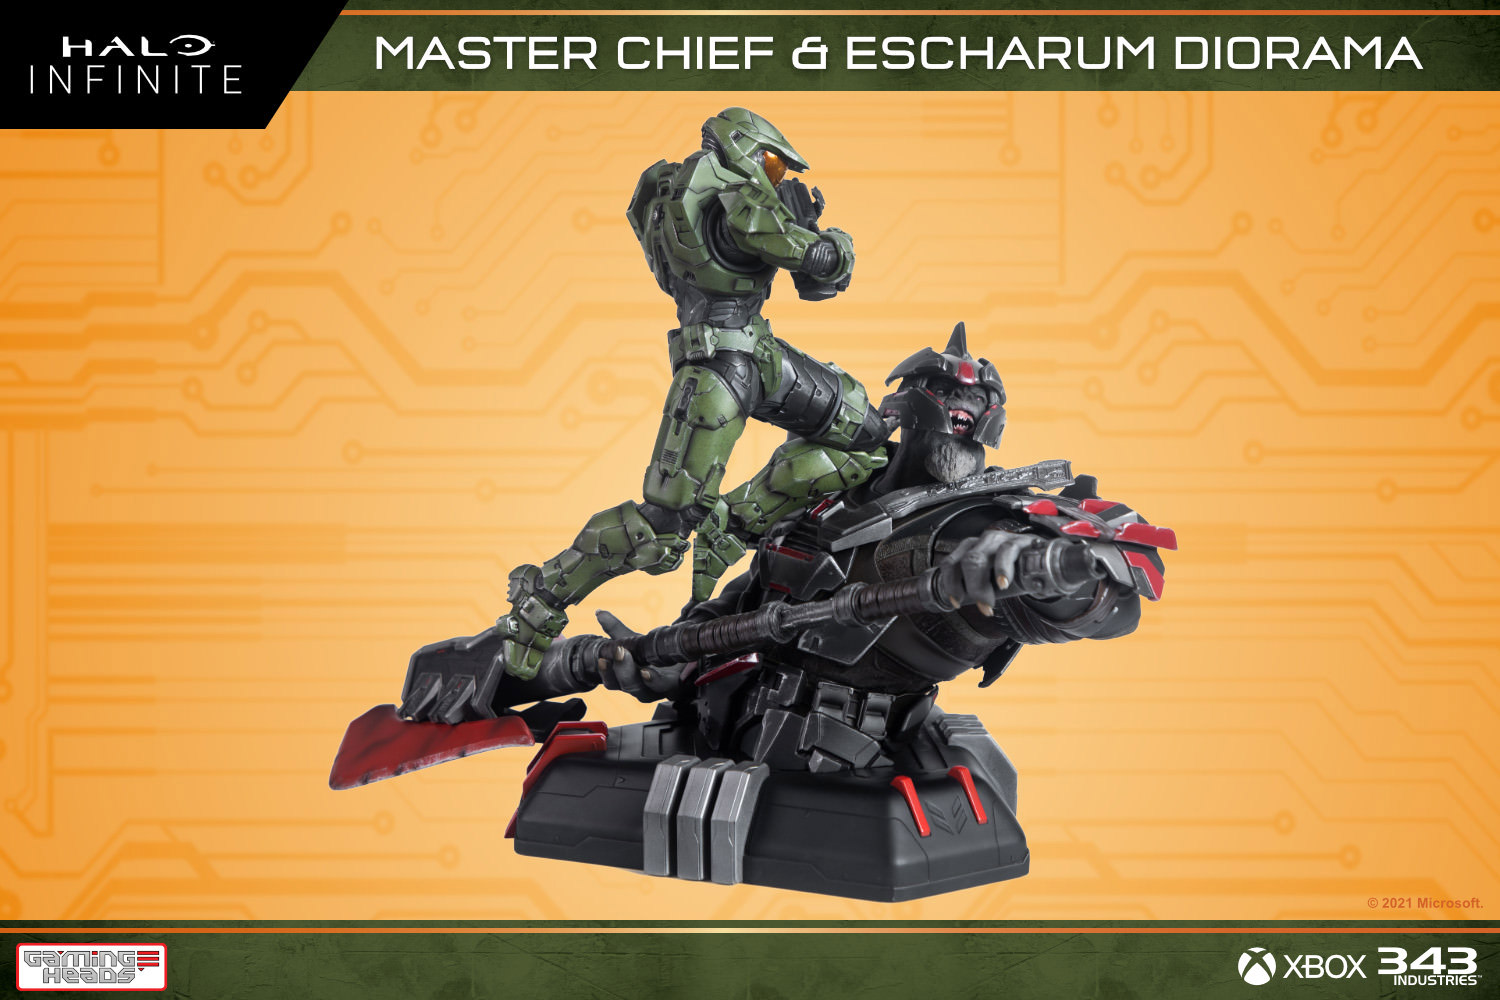 Master Chief vs. Escharum- Prototype Shown